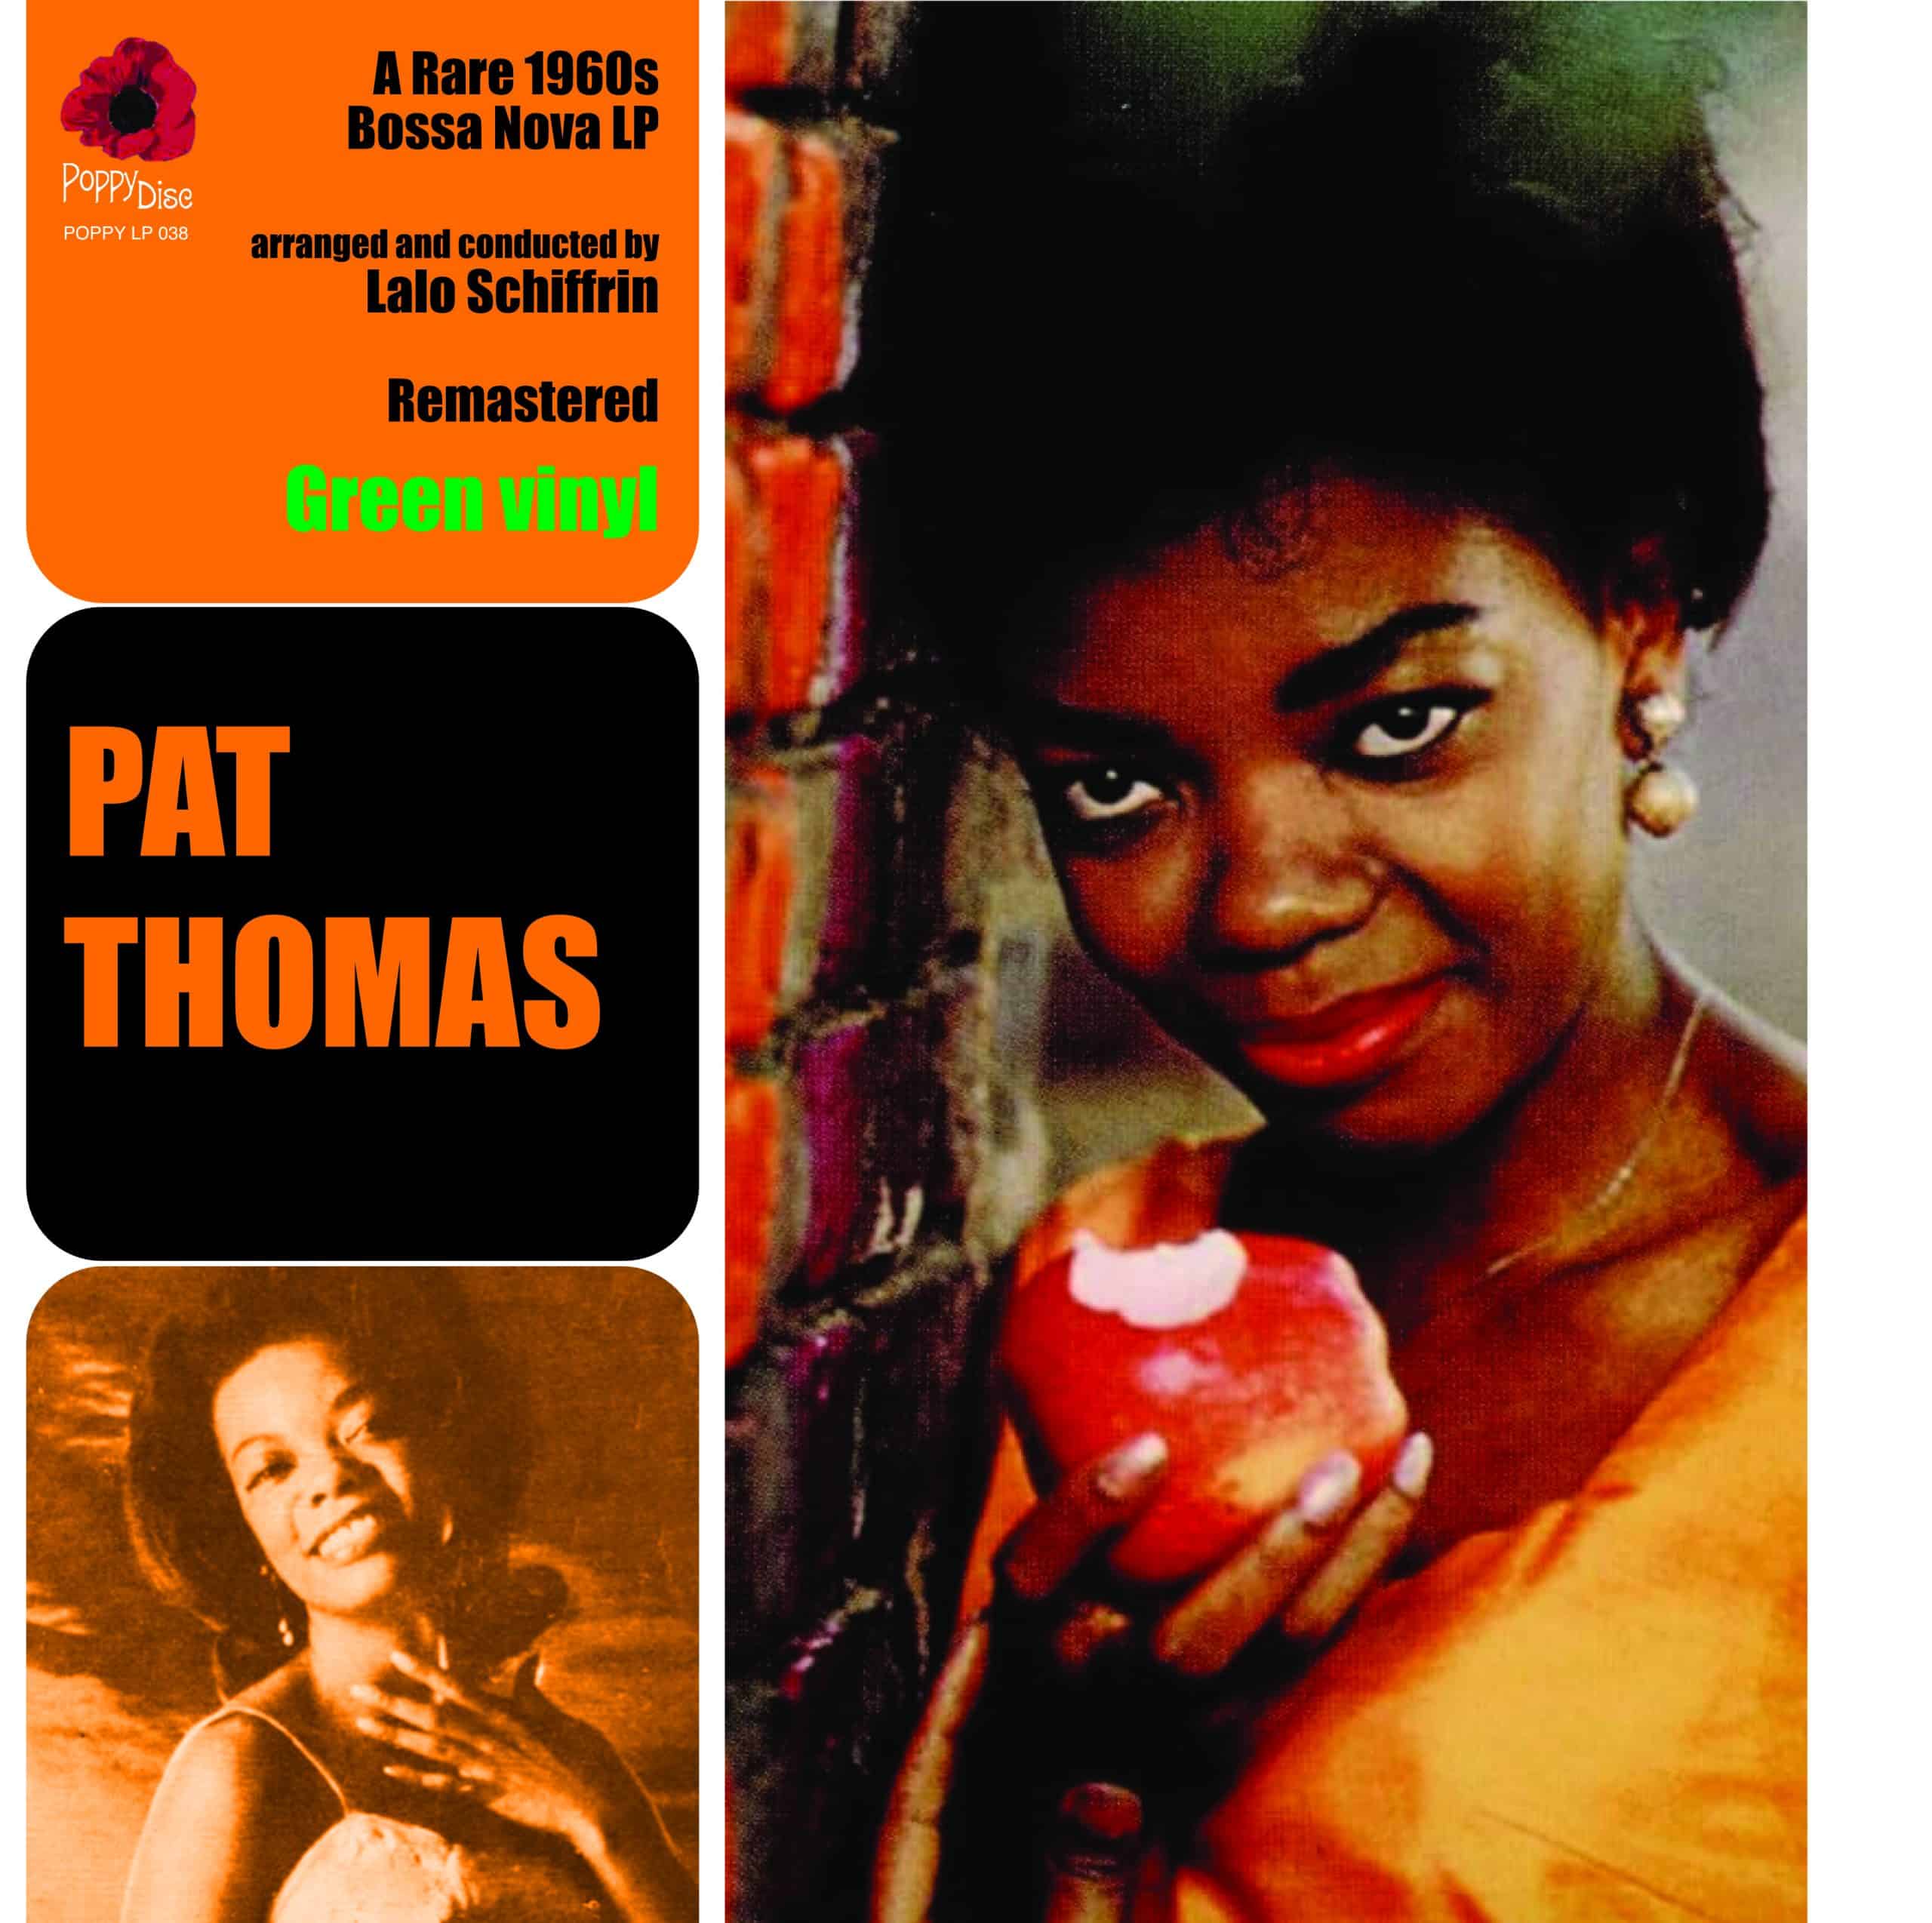 Pat Thomas